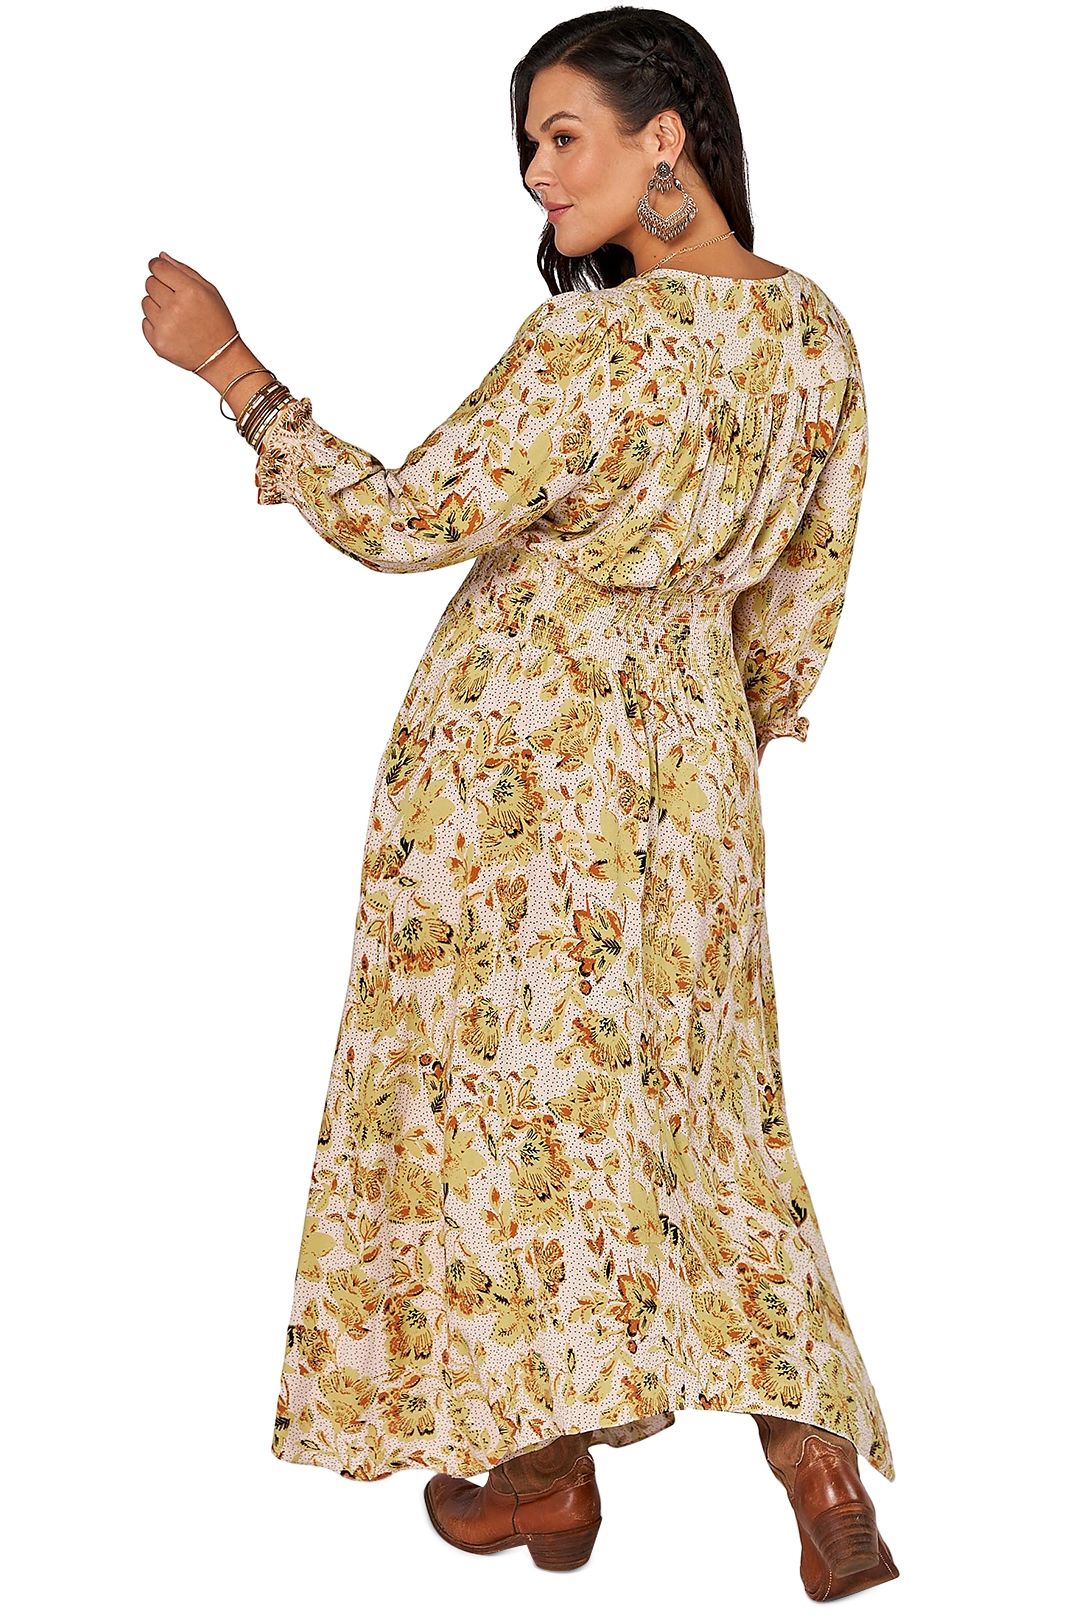 The Poetic Gypsy Gypsy Child Maxi Dress Print Multi Yellow